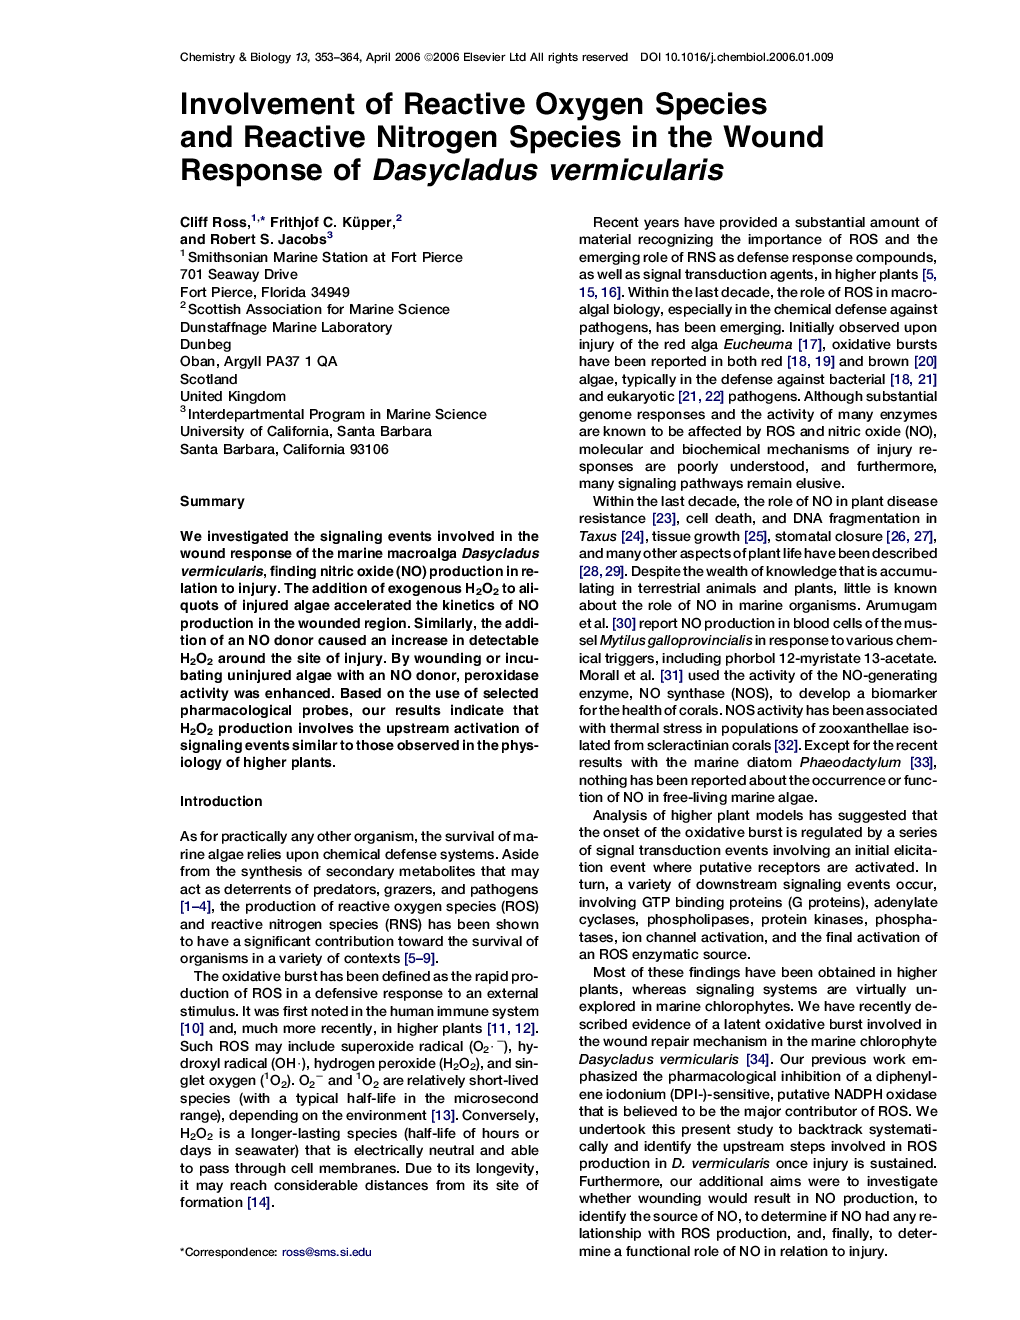 Involvement of Reactive Oxygen Species and Reactive Nitrogen Species in the Wound Response of Dasycladus vermicularis